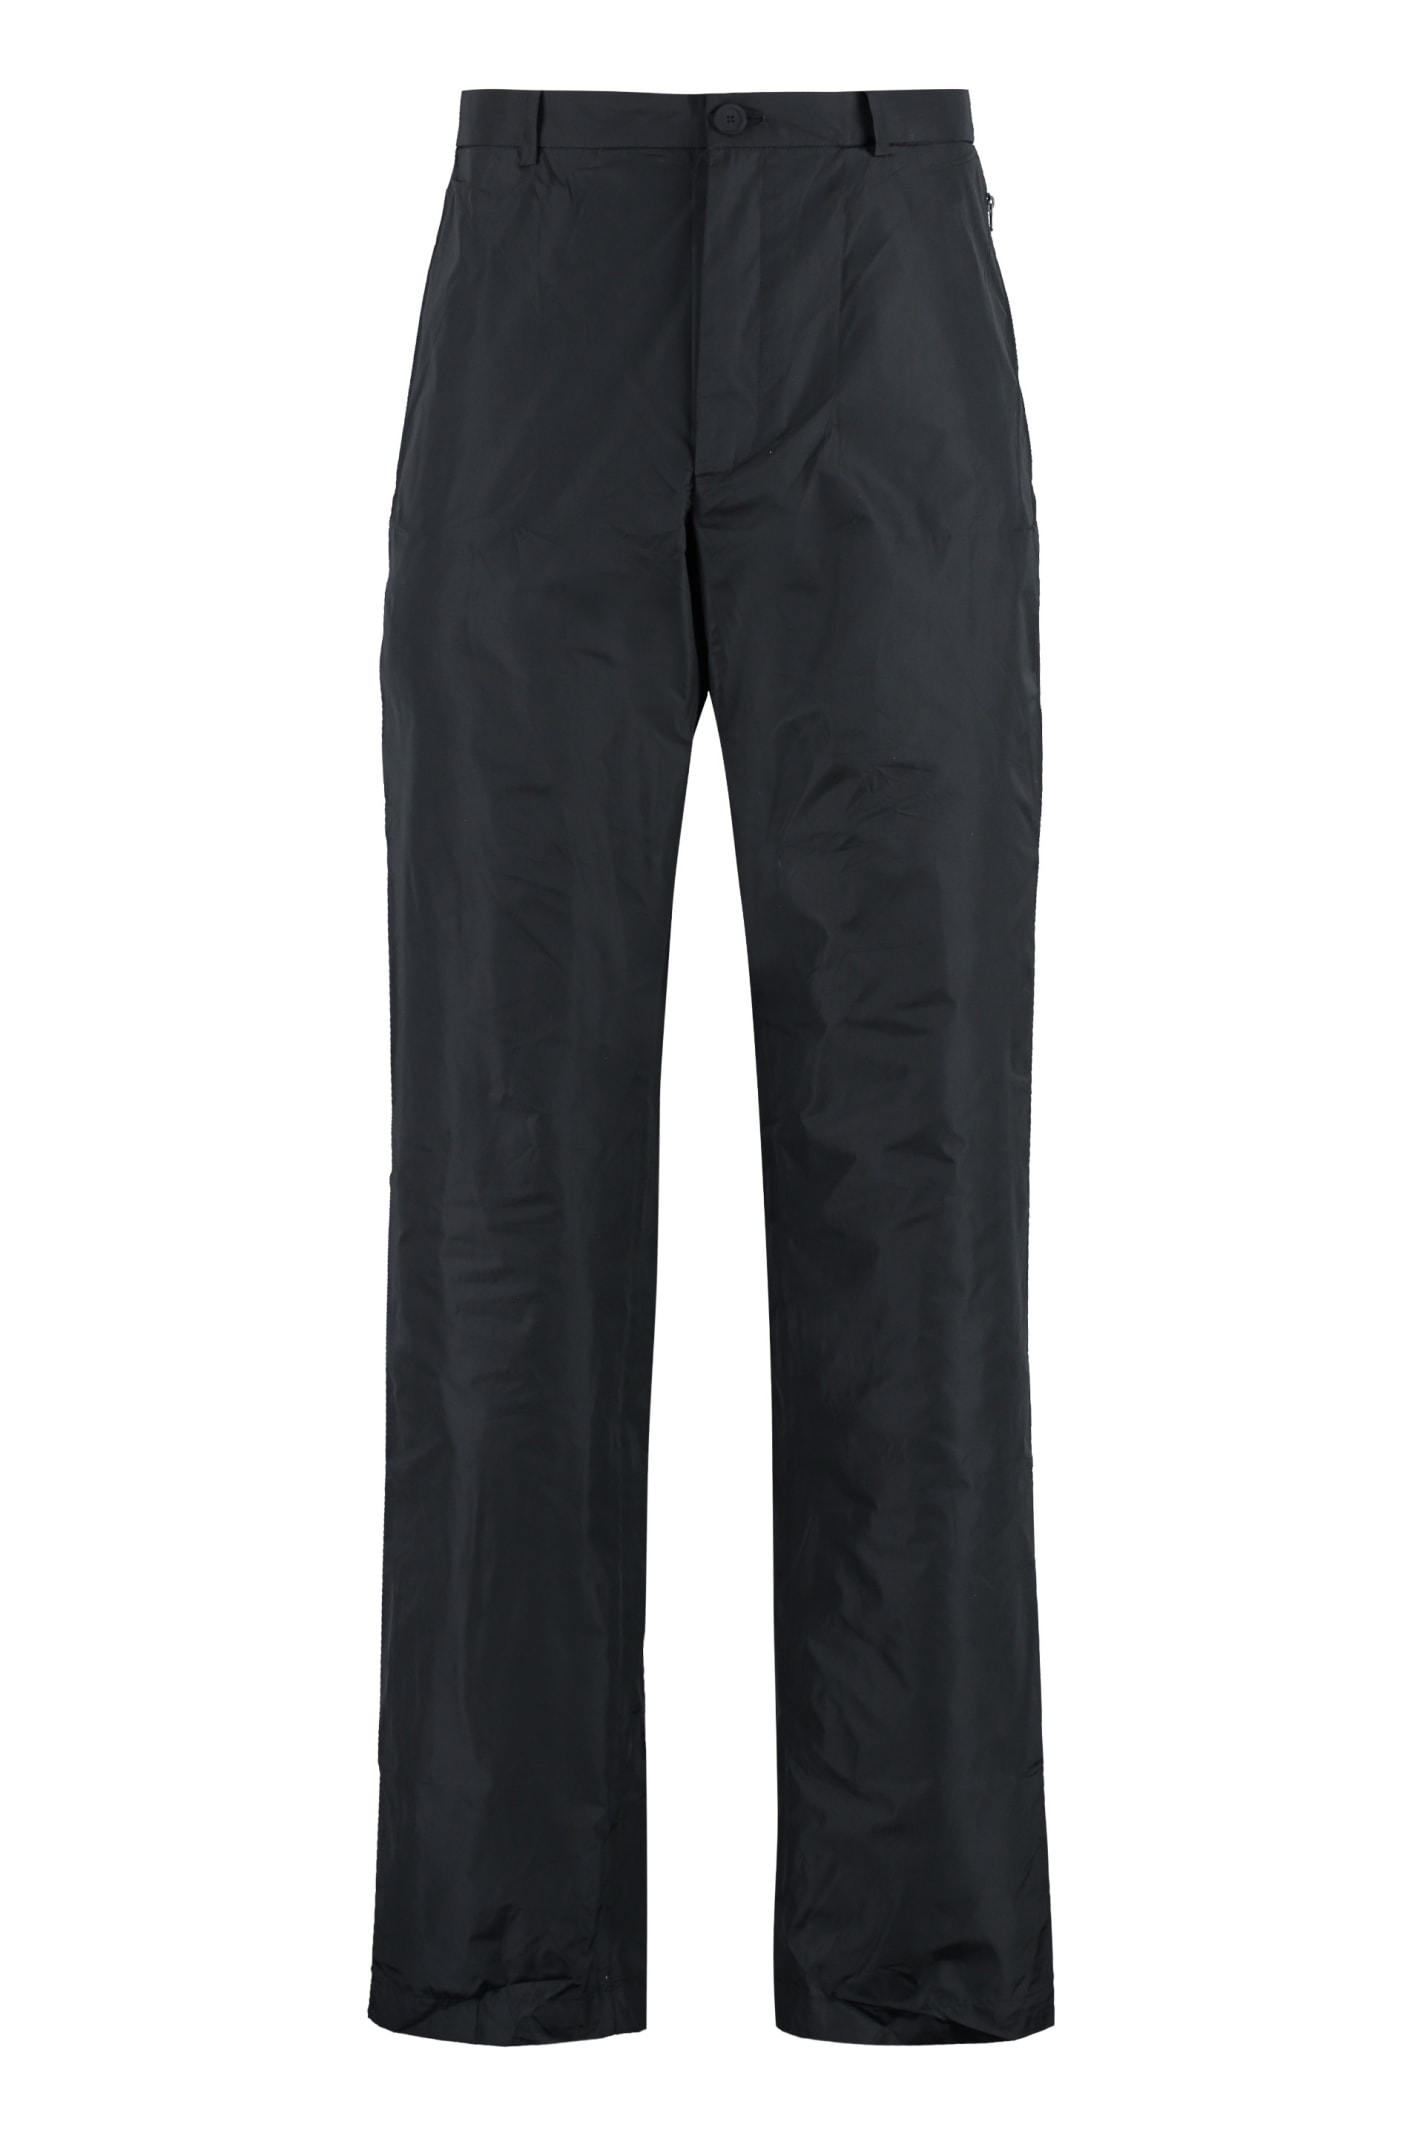 Balenciaga Technical Fabric Pants